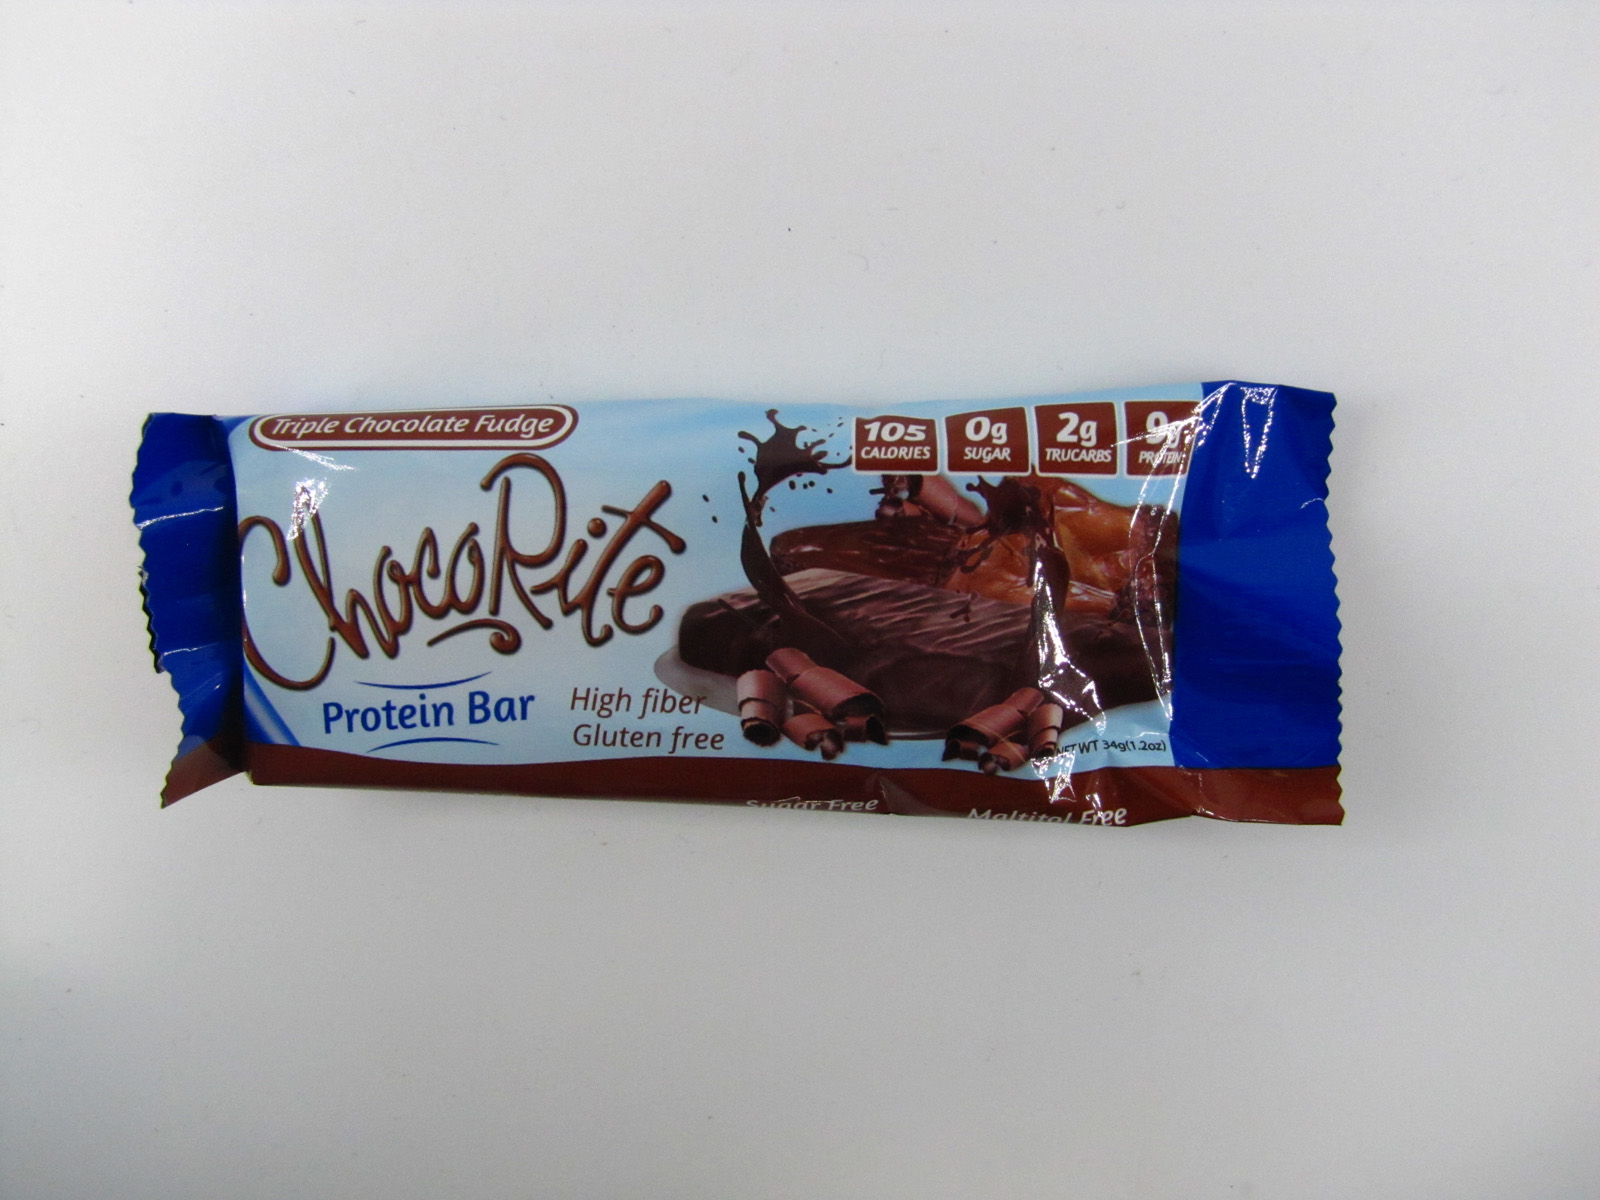 Chocorite Protein Bar ( 34g)- Triple Chocolate Fudge - front view